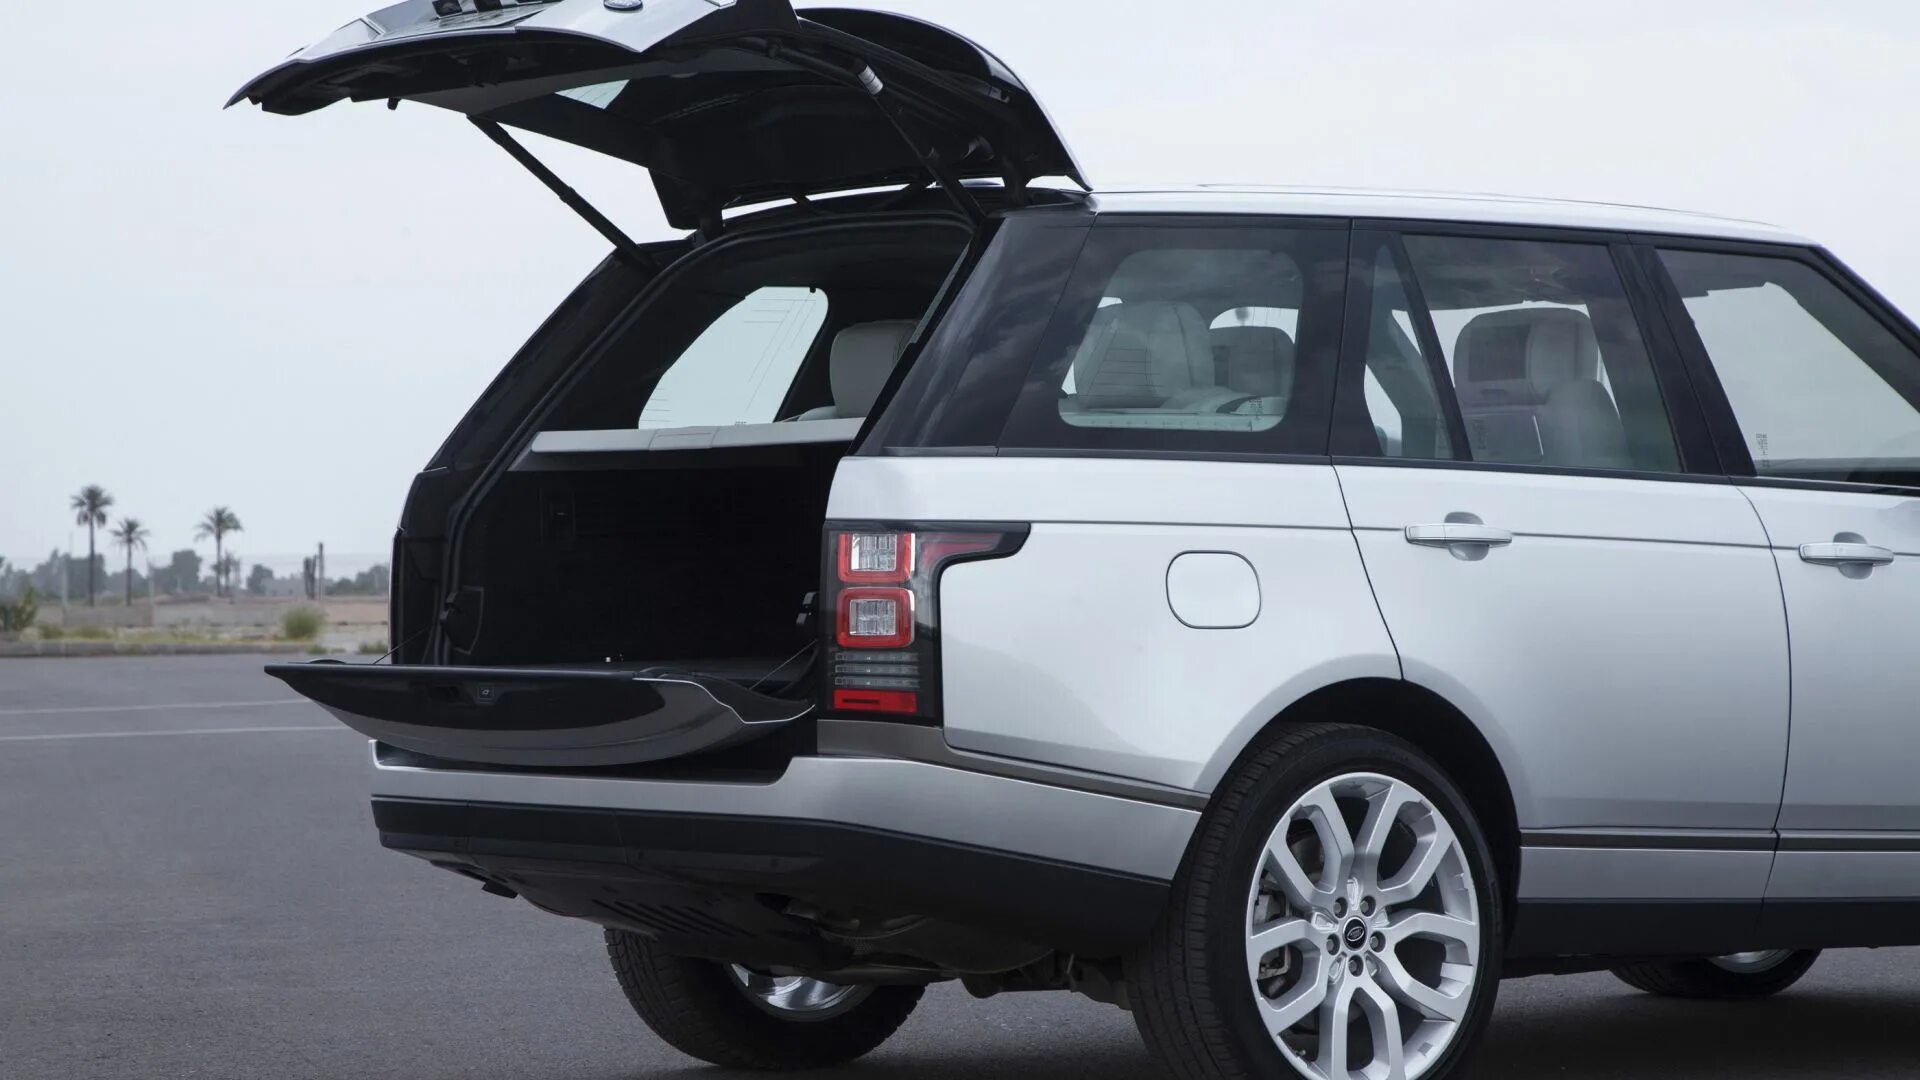 Рендж Ровер 2013 багажник. Land Rover range Rover багажник. Range Rover Vogue c открытым багажником. Рендж Ровер спорт 2012 багажник.